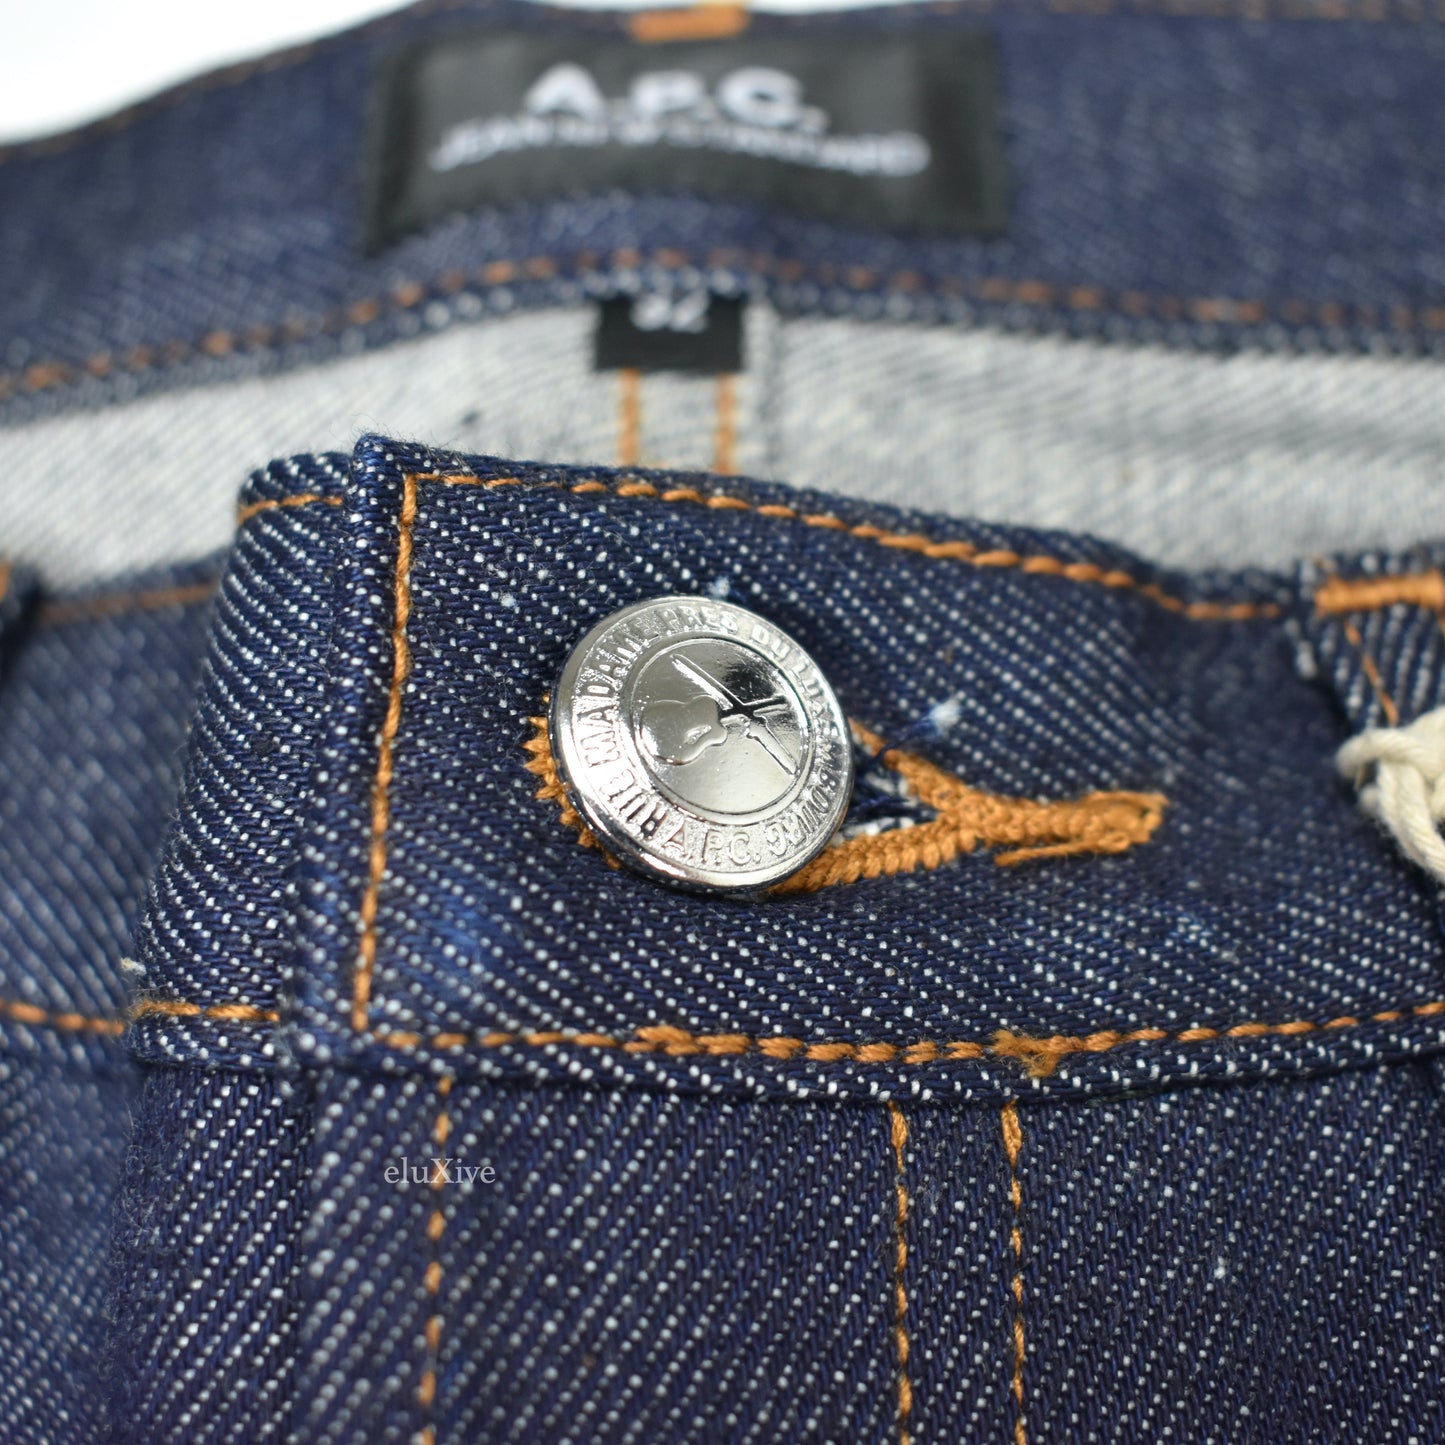 A.P.C. - Raw Selvedge Denim New Standard Jeans